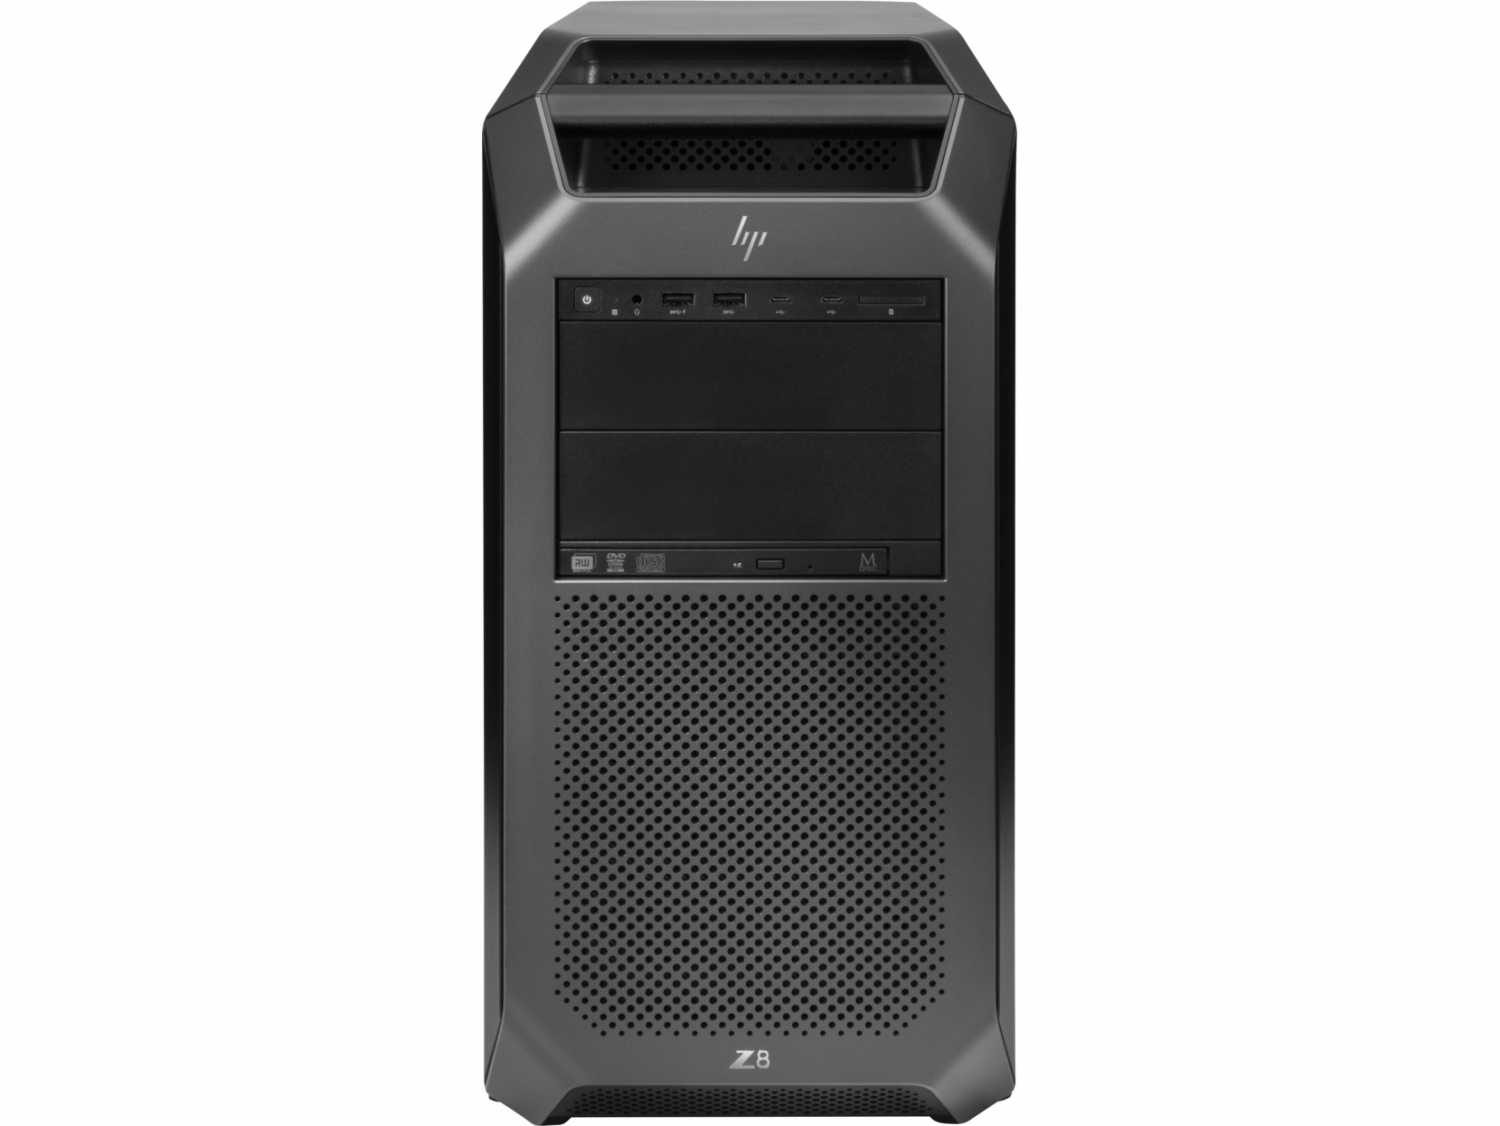 Рабочая станция HP Z8 G4, Xeon 5120, 64GB(4x16GB)DDR4-2666 ECC REG, 256 SSD, DVD-ODD, No Integrated, mouse, keyboard, Win10p64Workstations